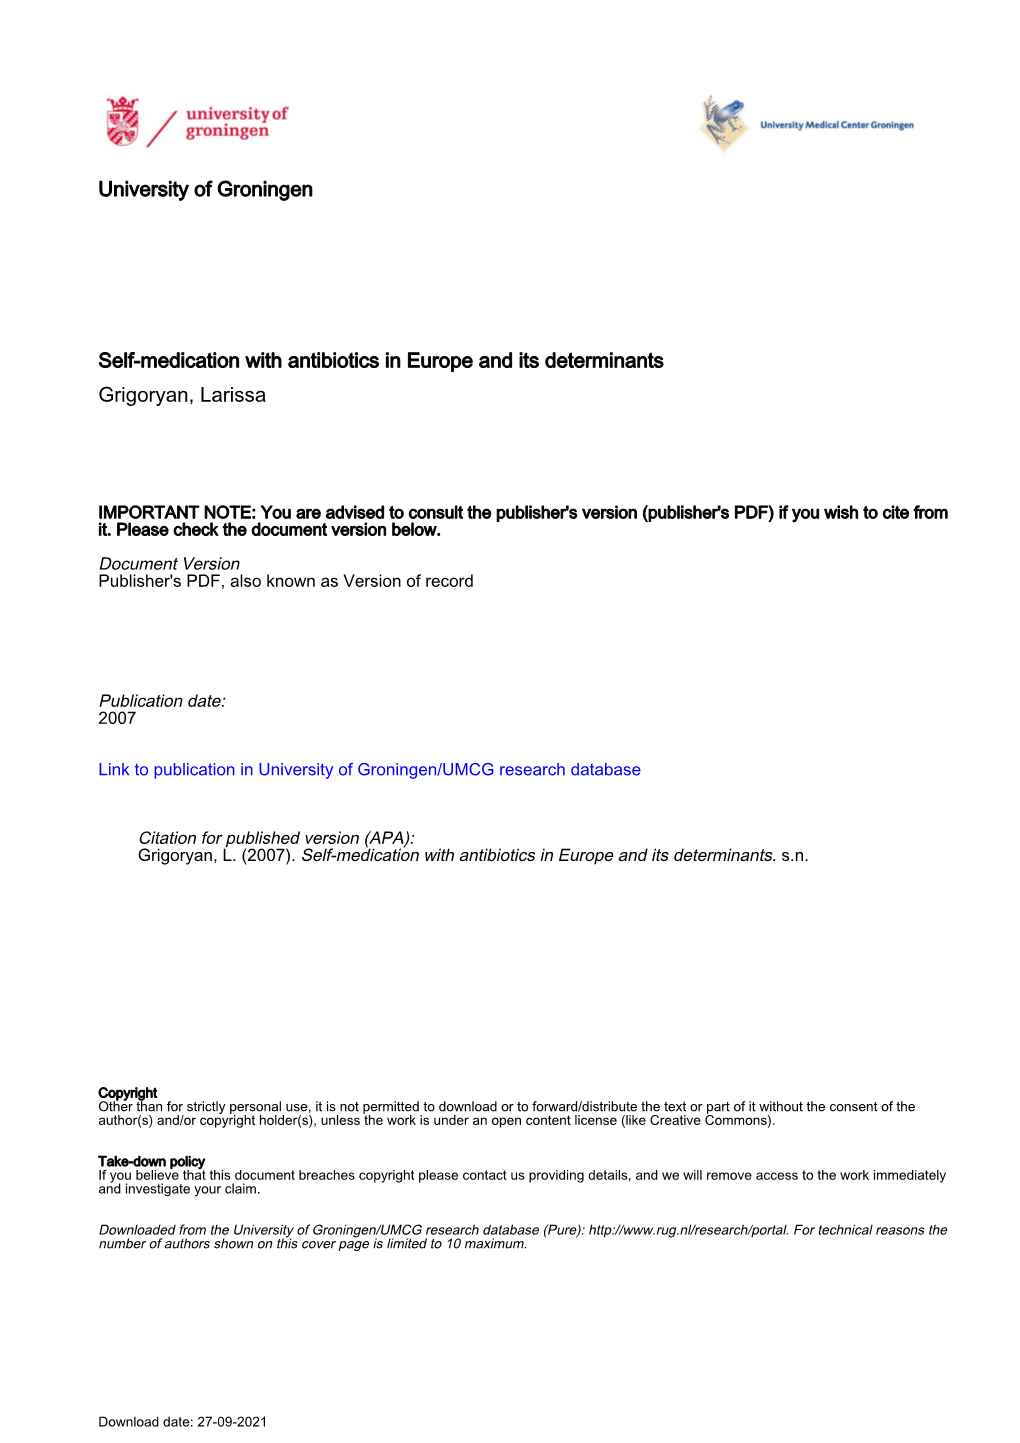 University of Groningen Self-Medication with Antibiotics In